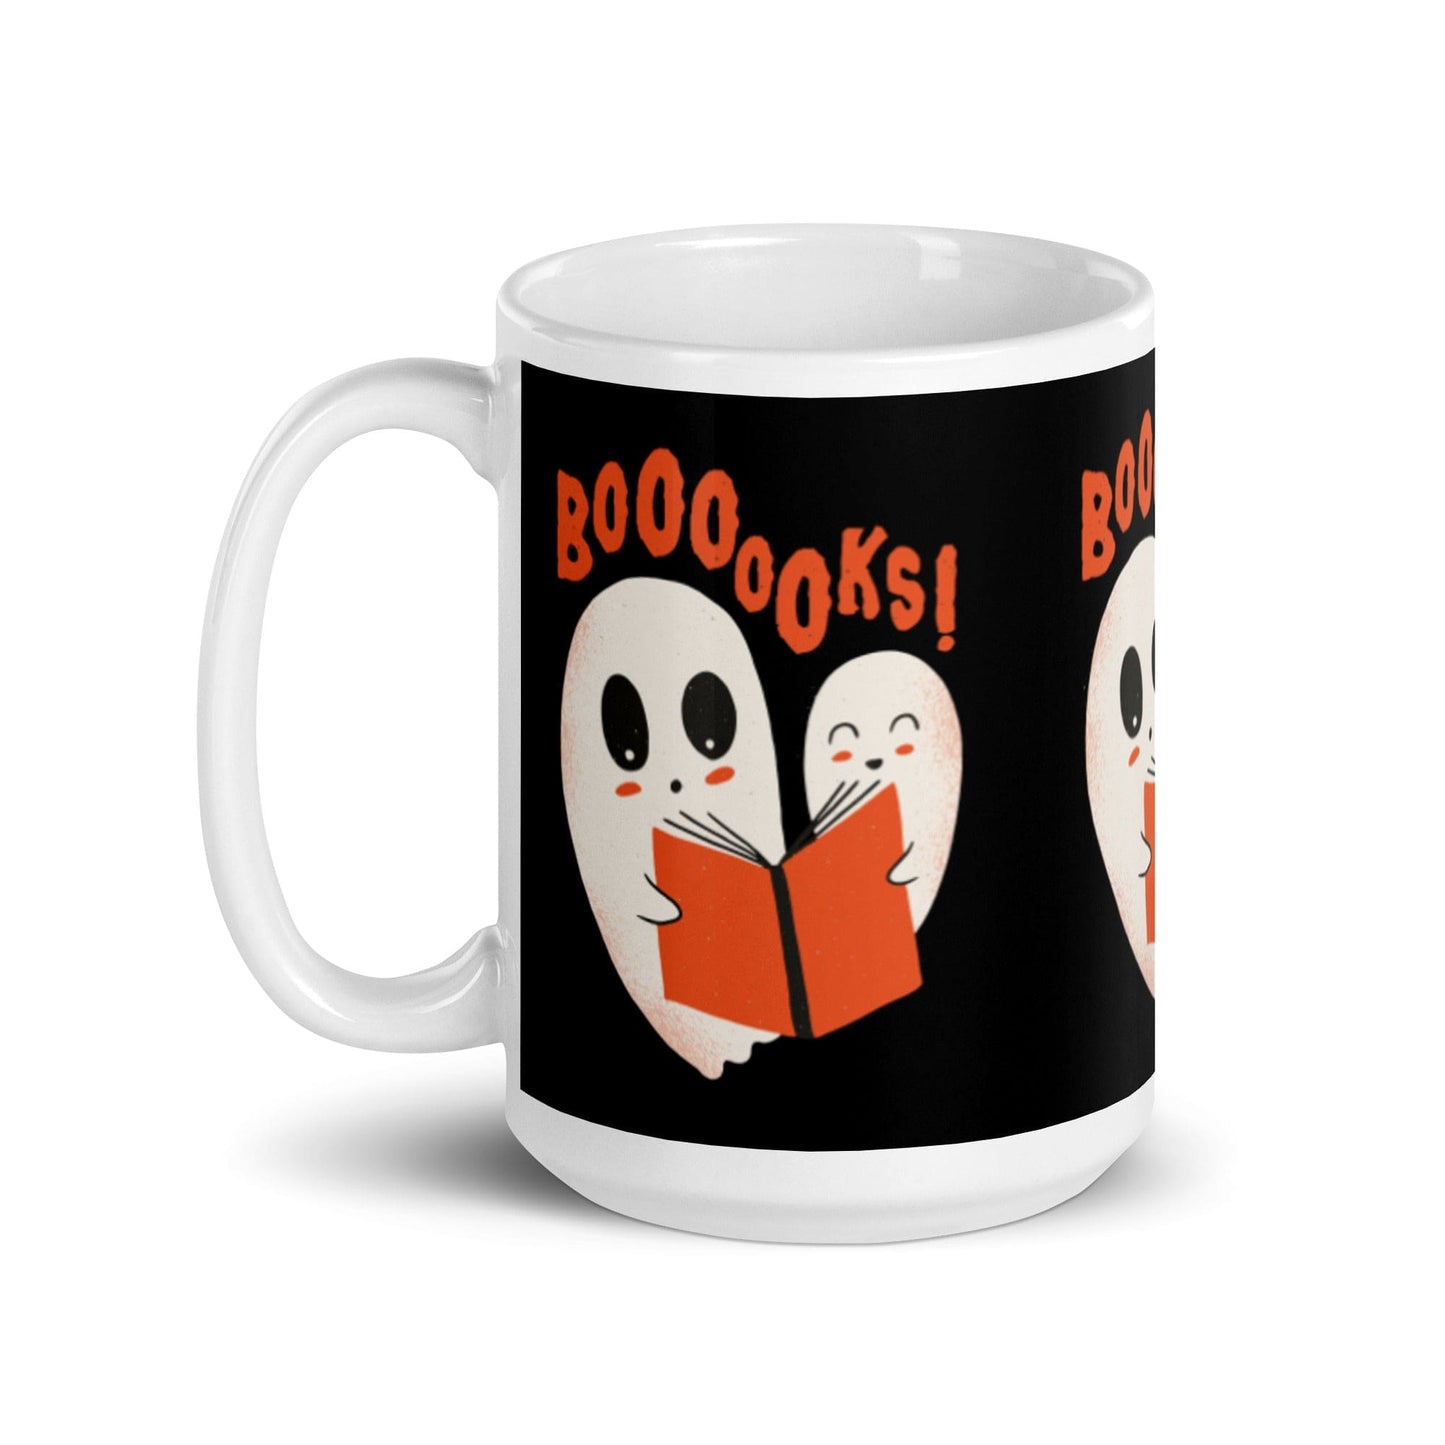 Ghosts with Boooooks - Mug